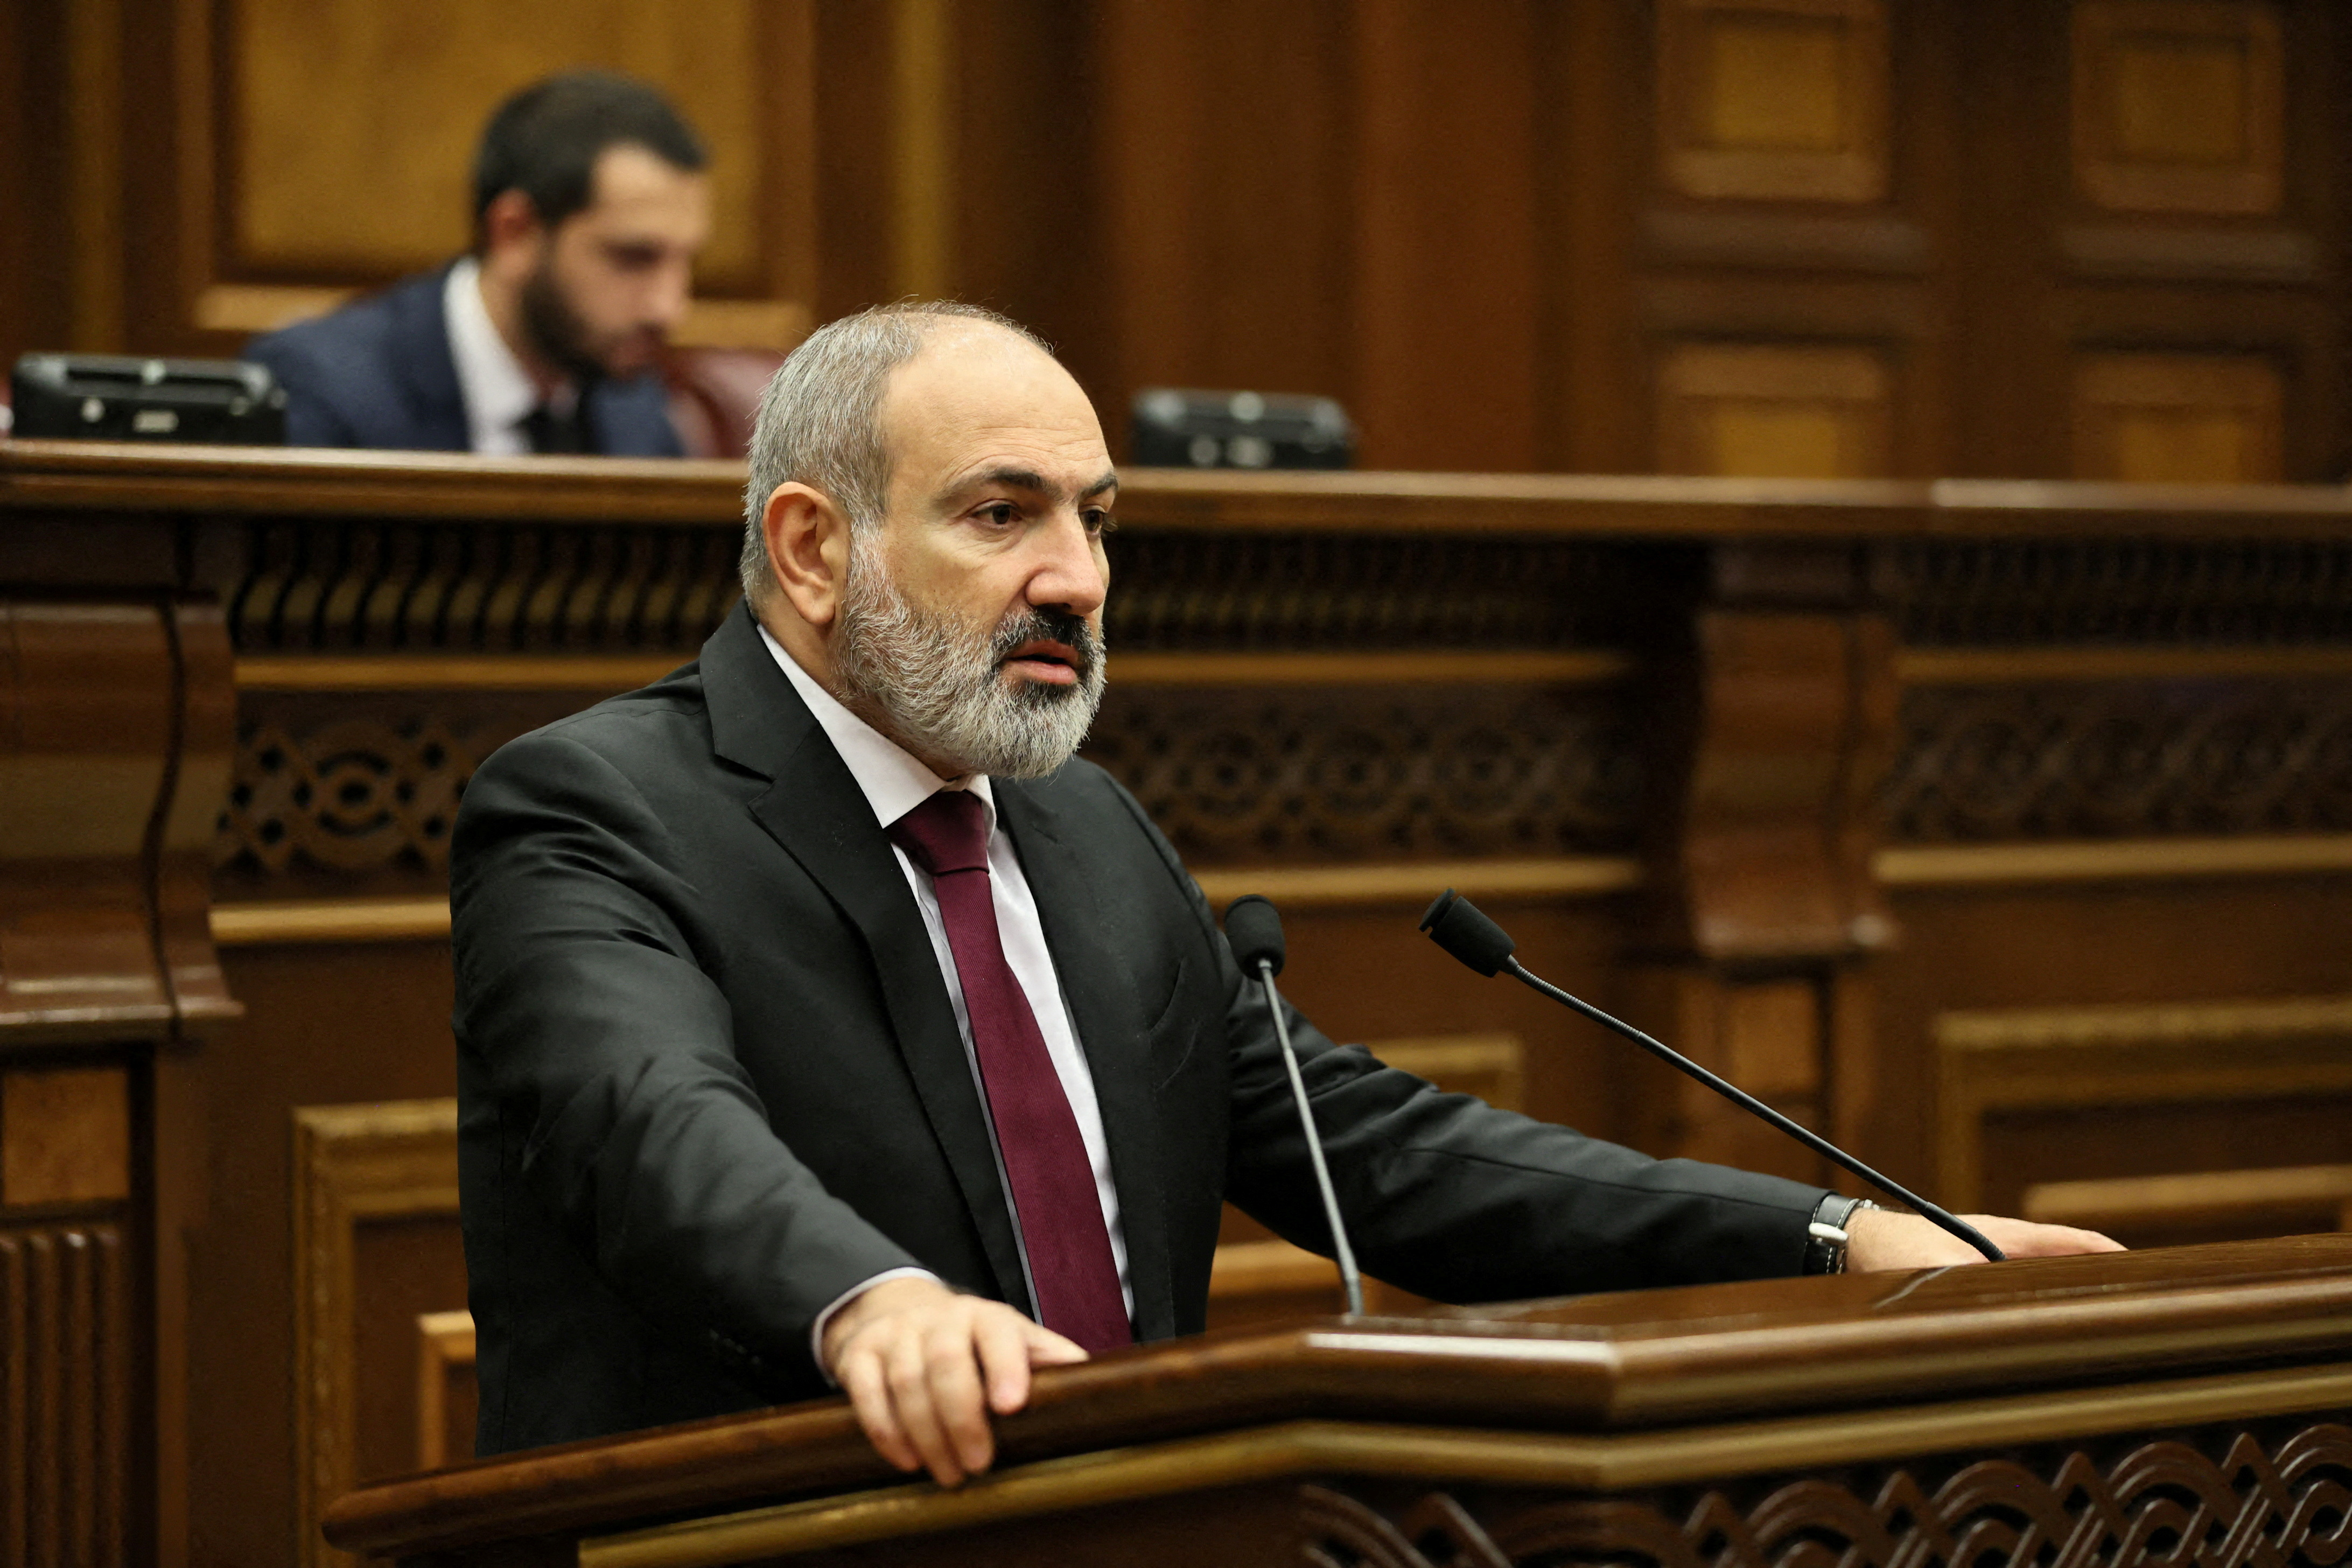 Armenian Prime Minister Pashinyan addresses parliament in Yerevan